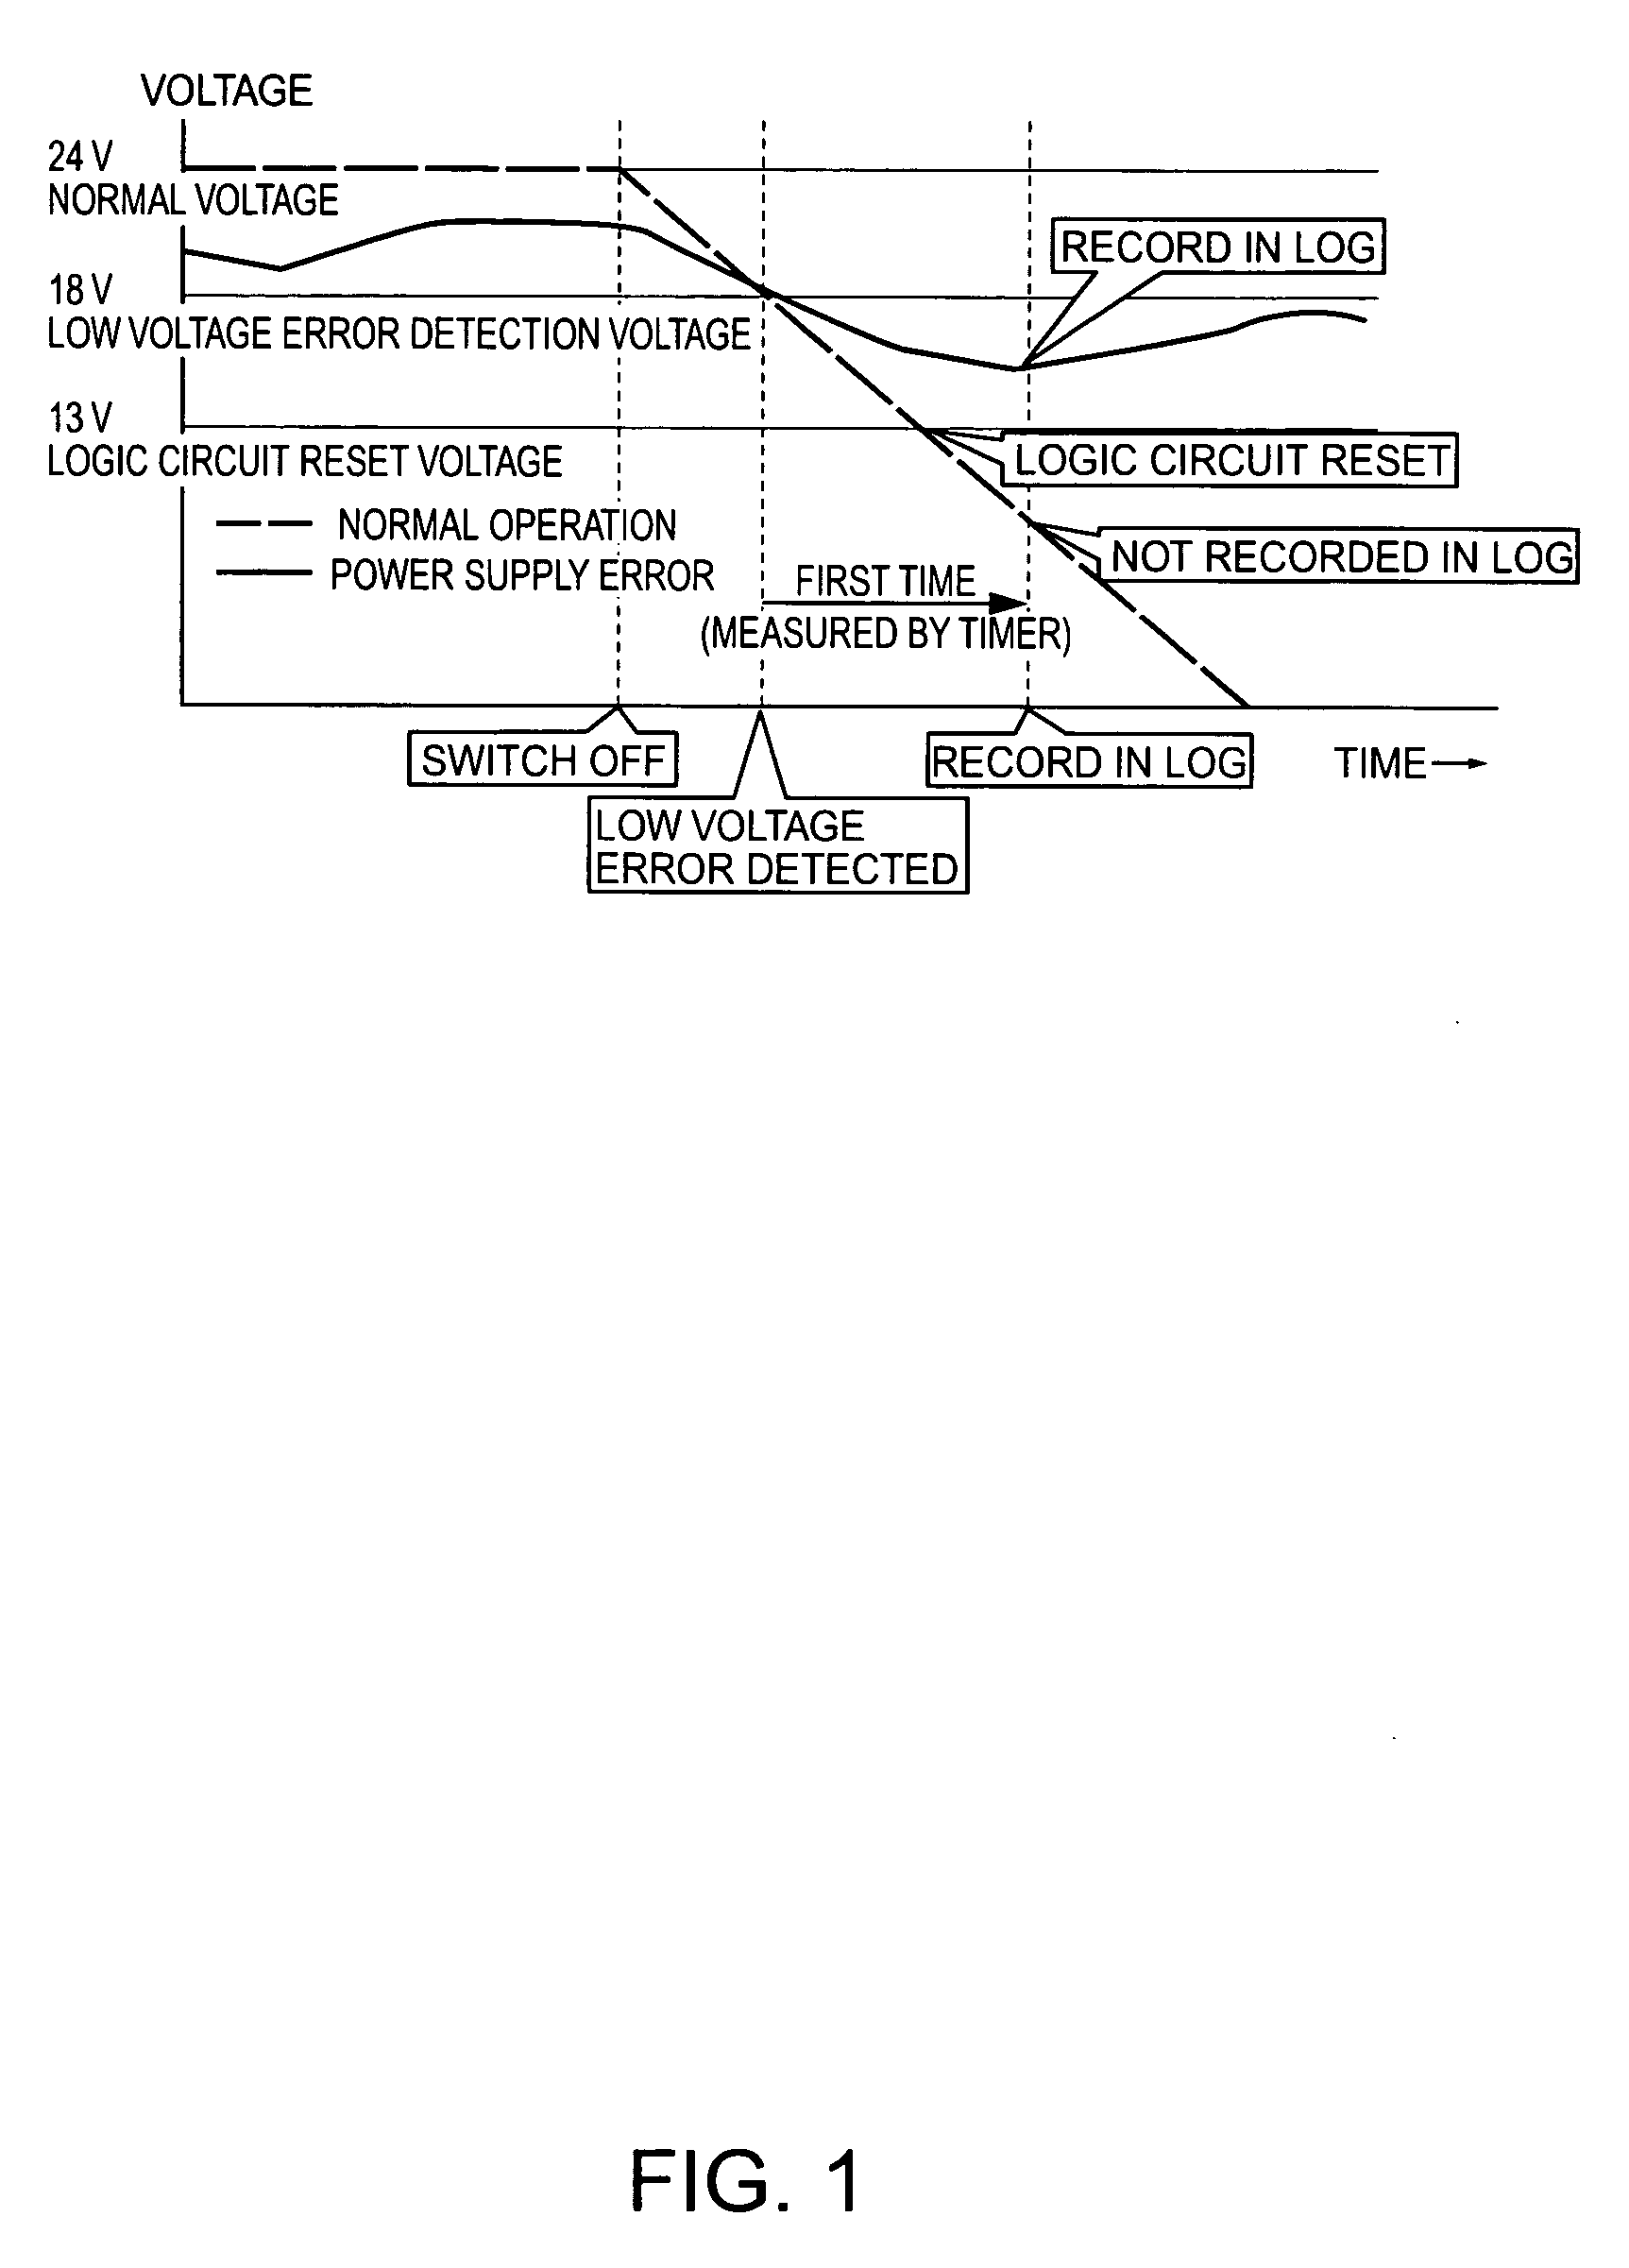 Printer and method of recording a low voltage error log